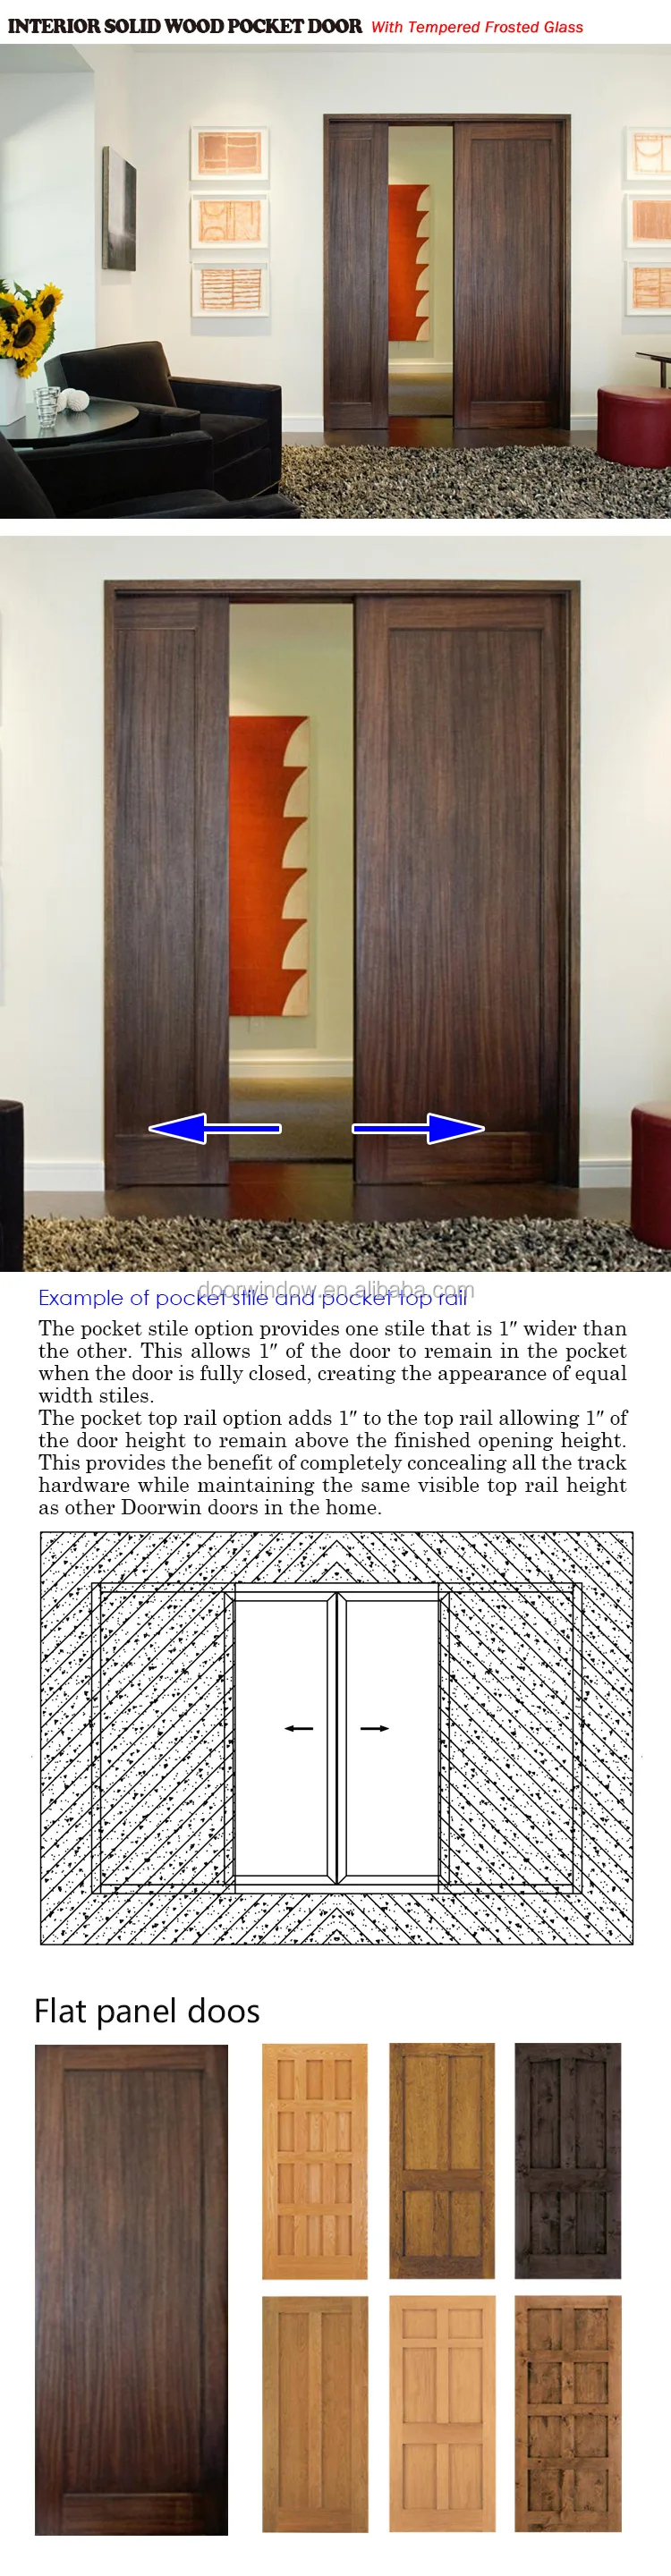 office cube interior pocket doors american apartment condo room partition doors